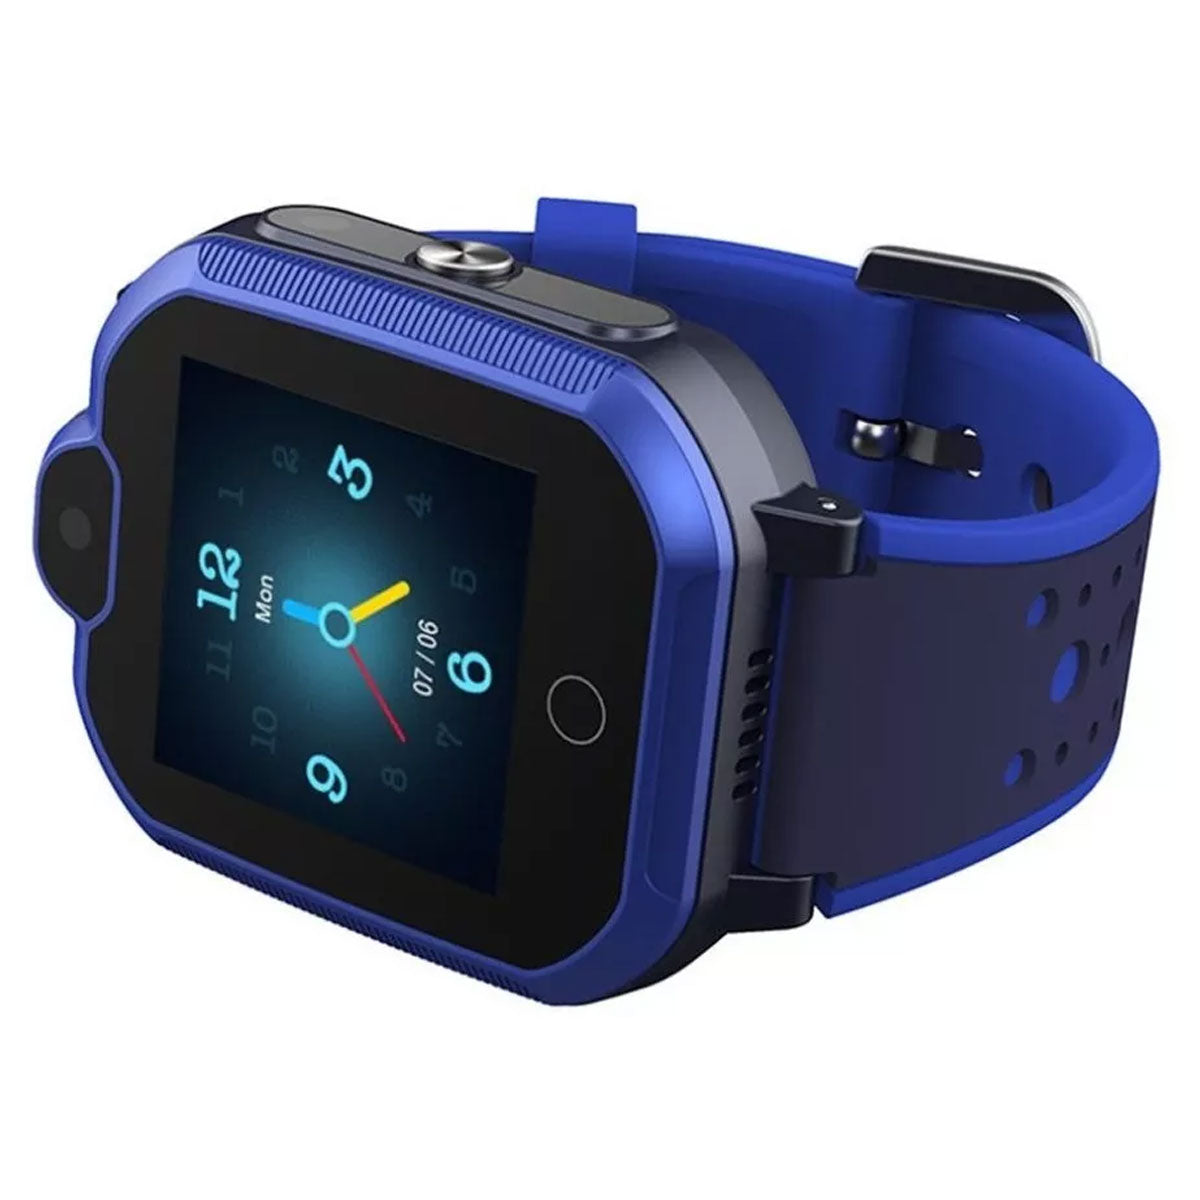 Fralugio Smartwatch Reloj Inteligente 4g Gps Kids Videocall